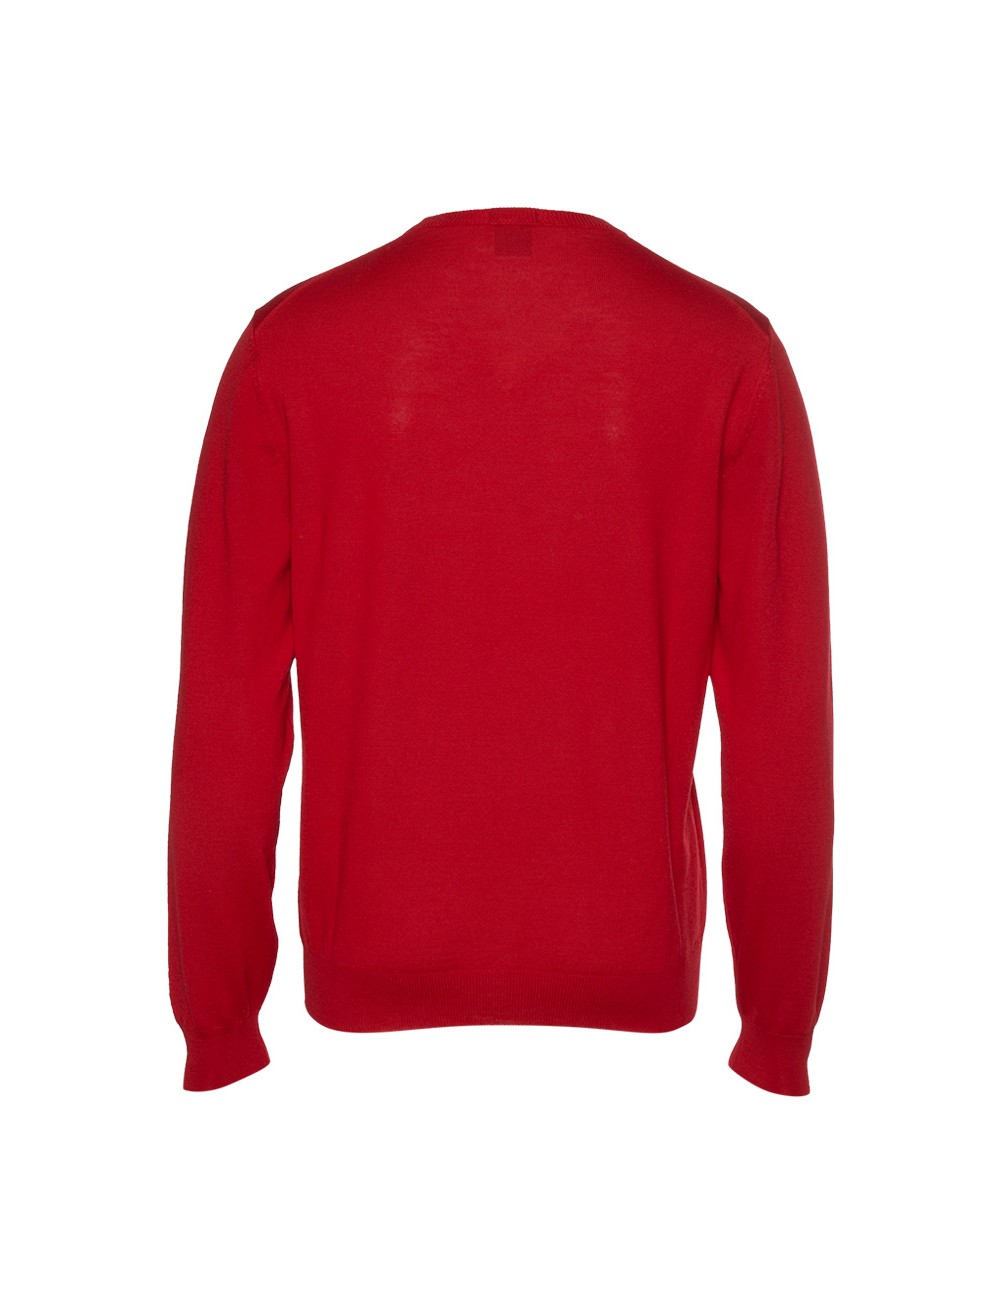 Hugo Boss Pico Jersey Man Red Wool